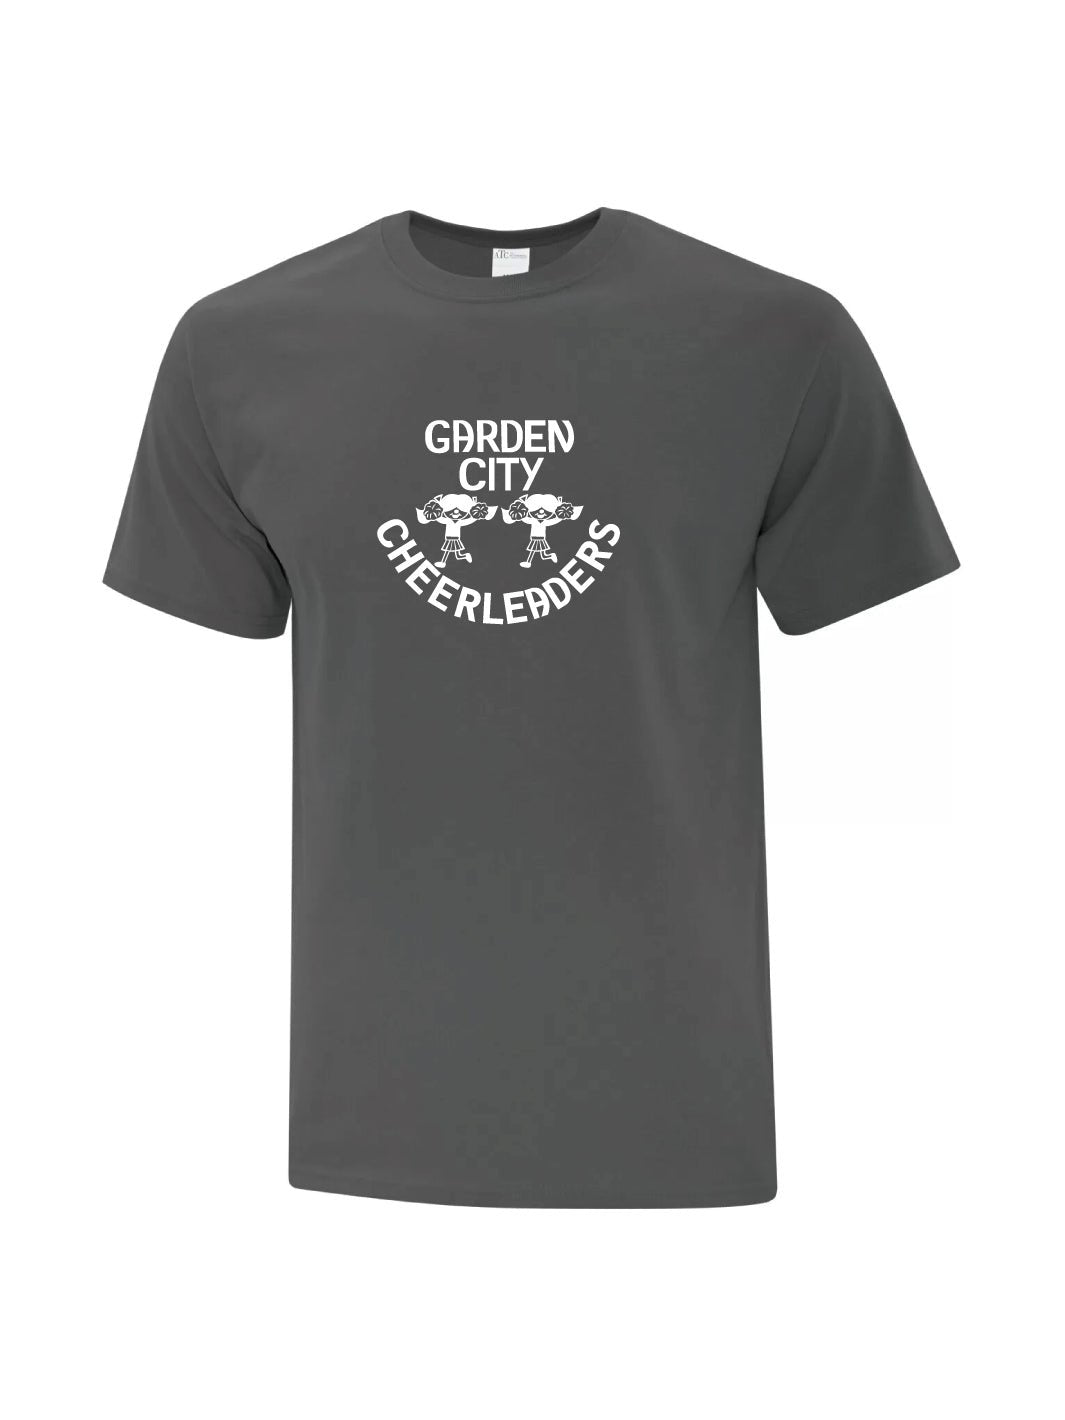 Adult Garden City Cheerleaders T-shirt - Oddball Workshop